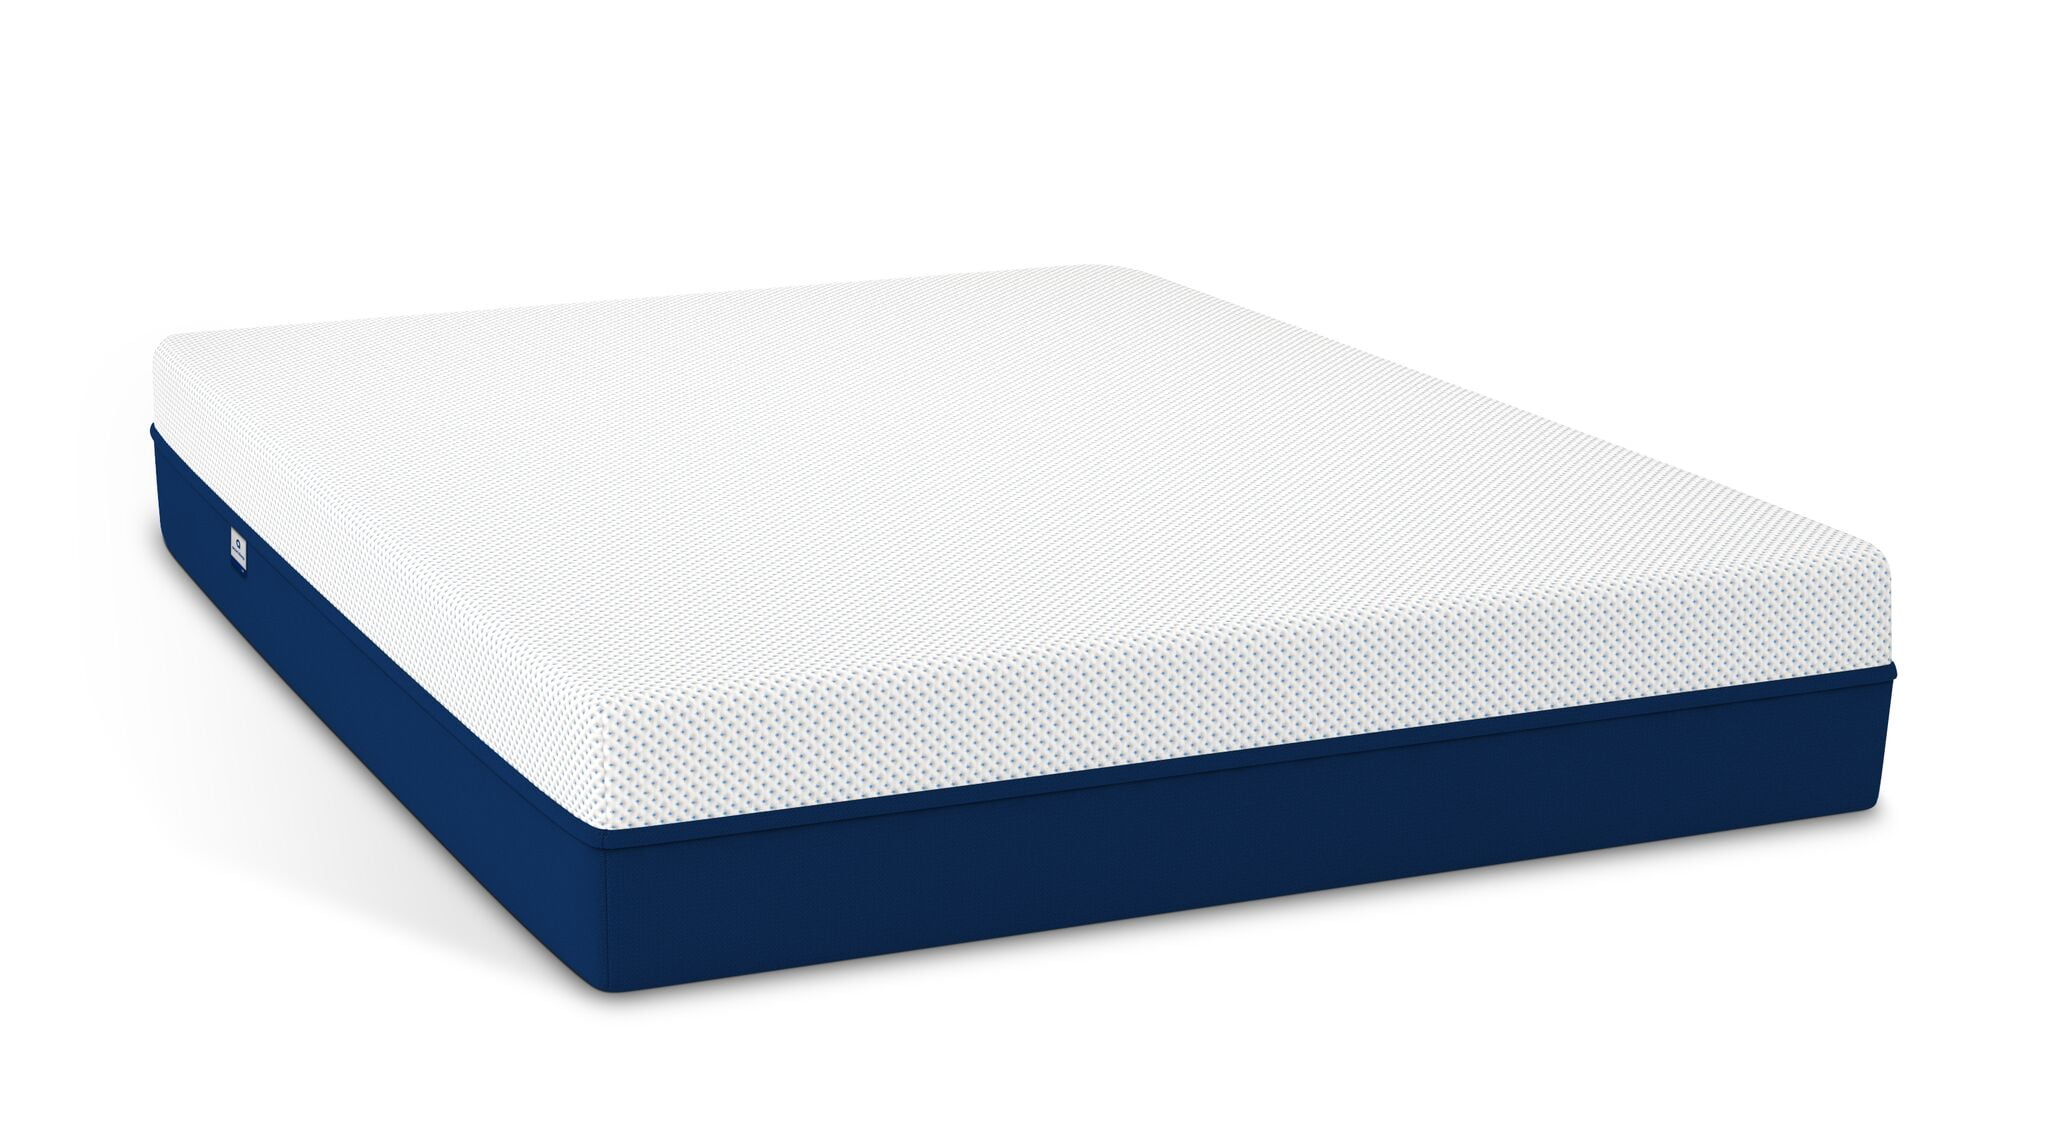 foam or gel mattress for stomach sleepers